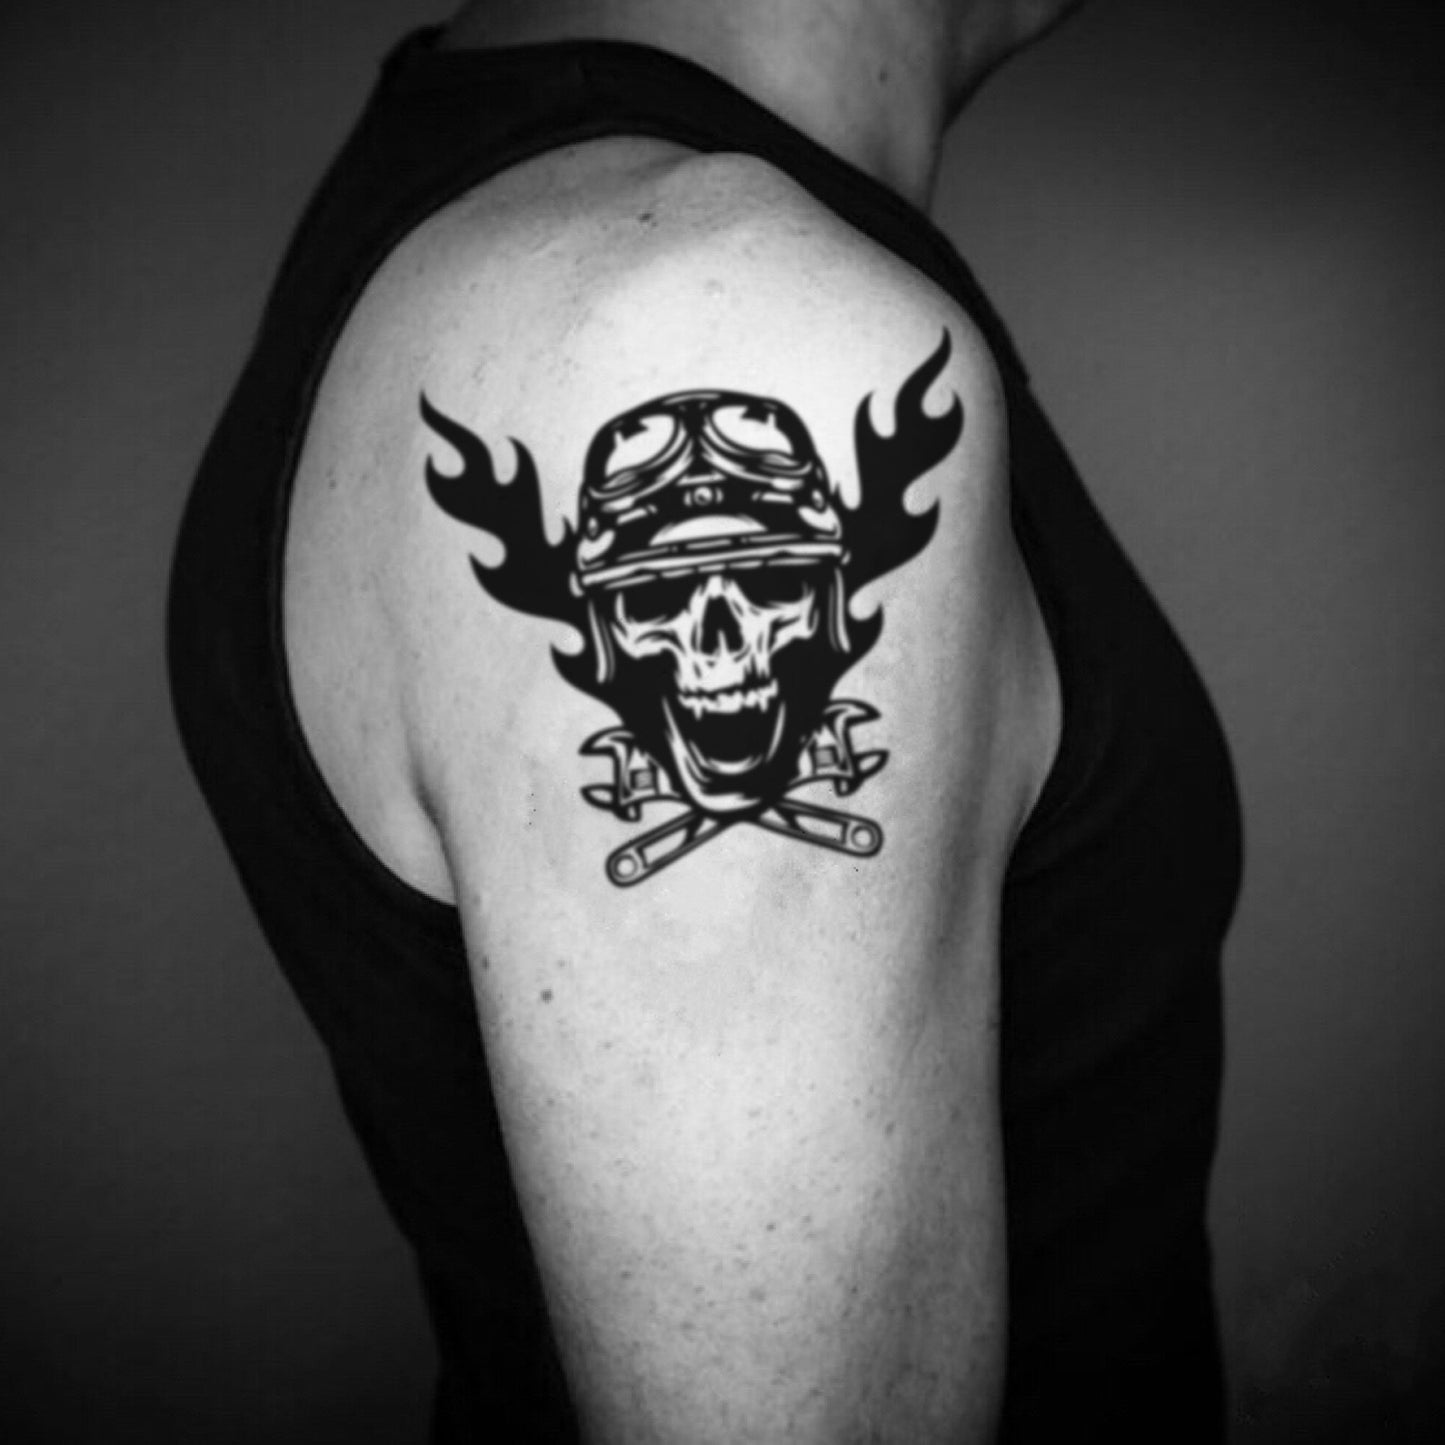 fake big ghost rider skull flame fire illustrative temporary tattoo sticker design idea on upper arm